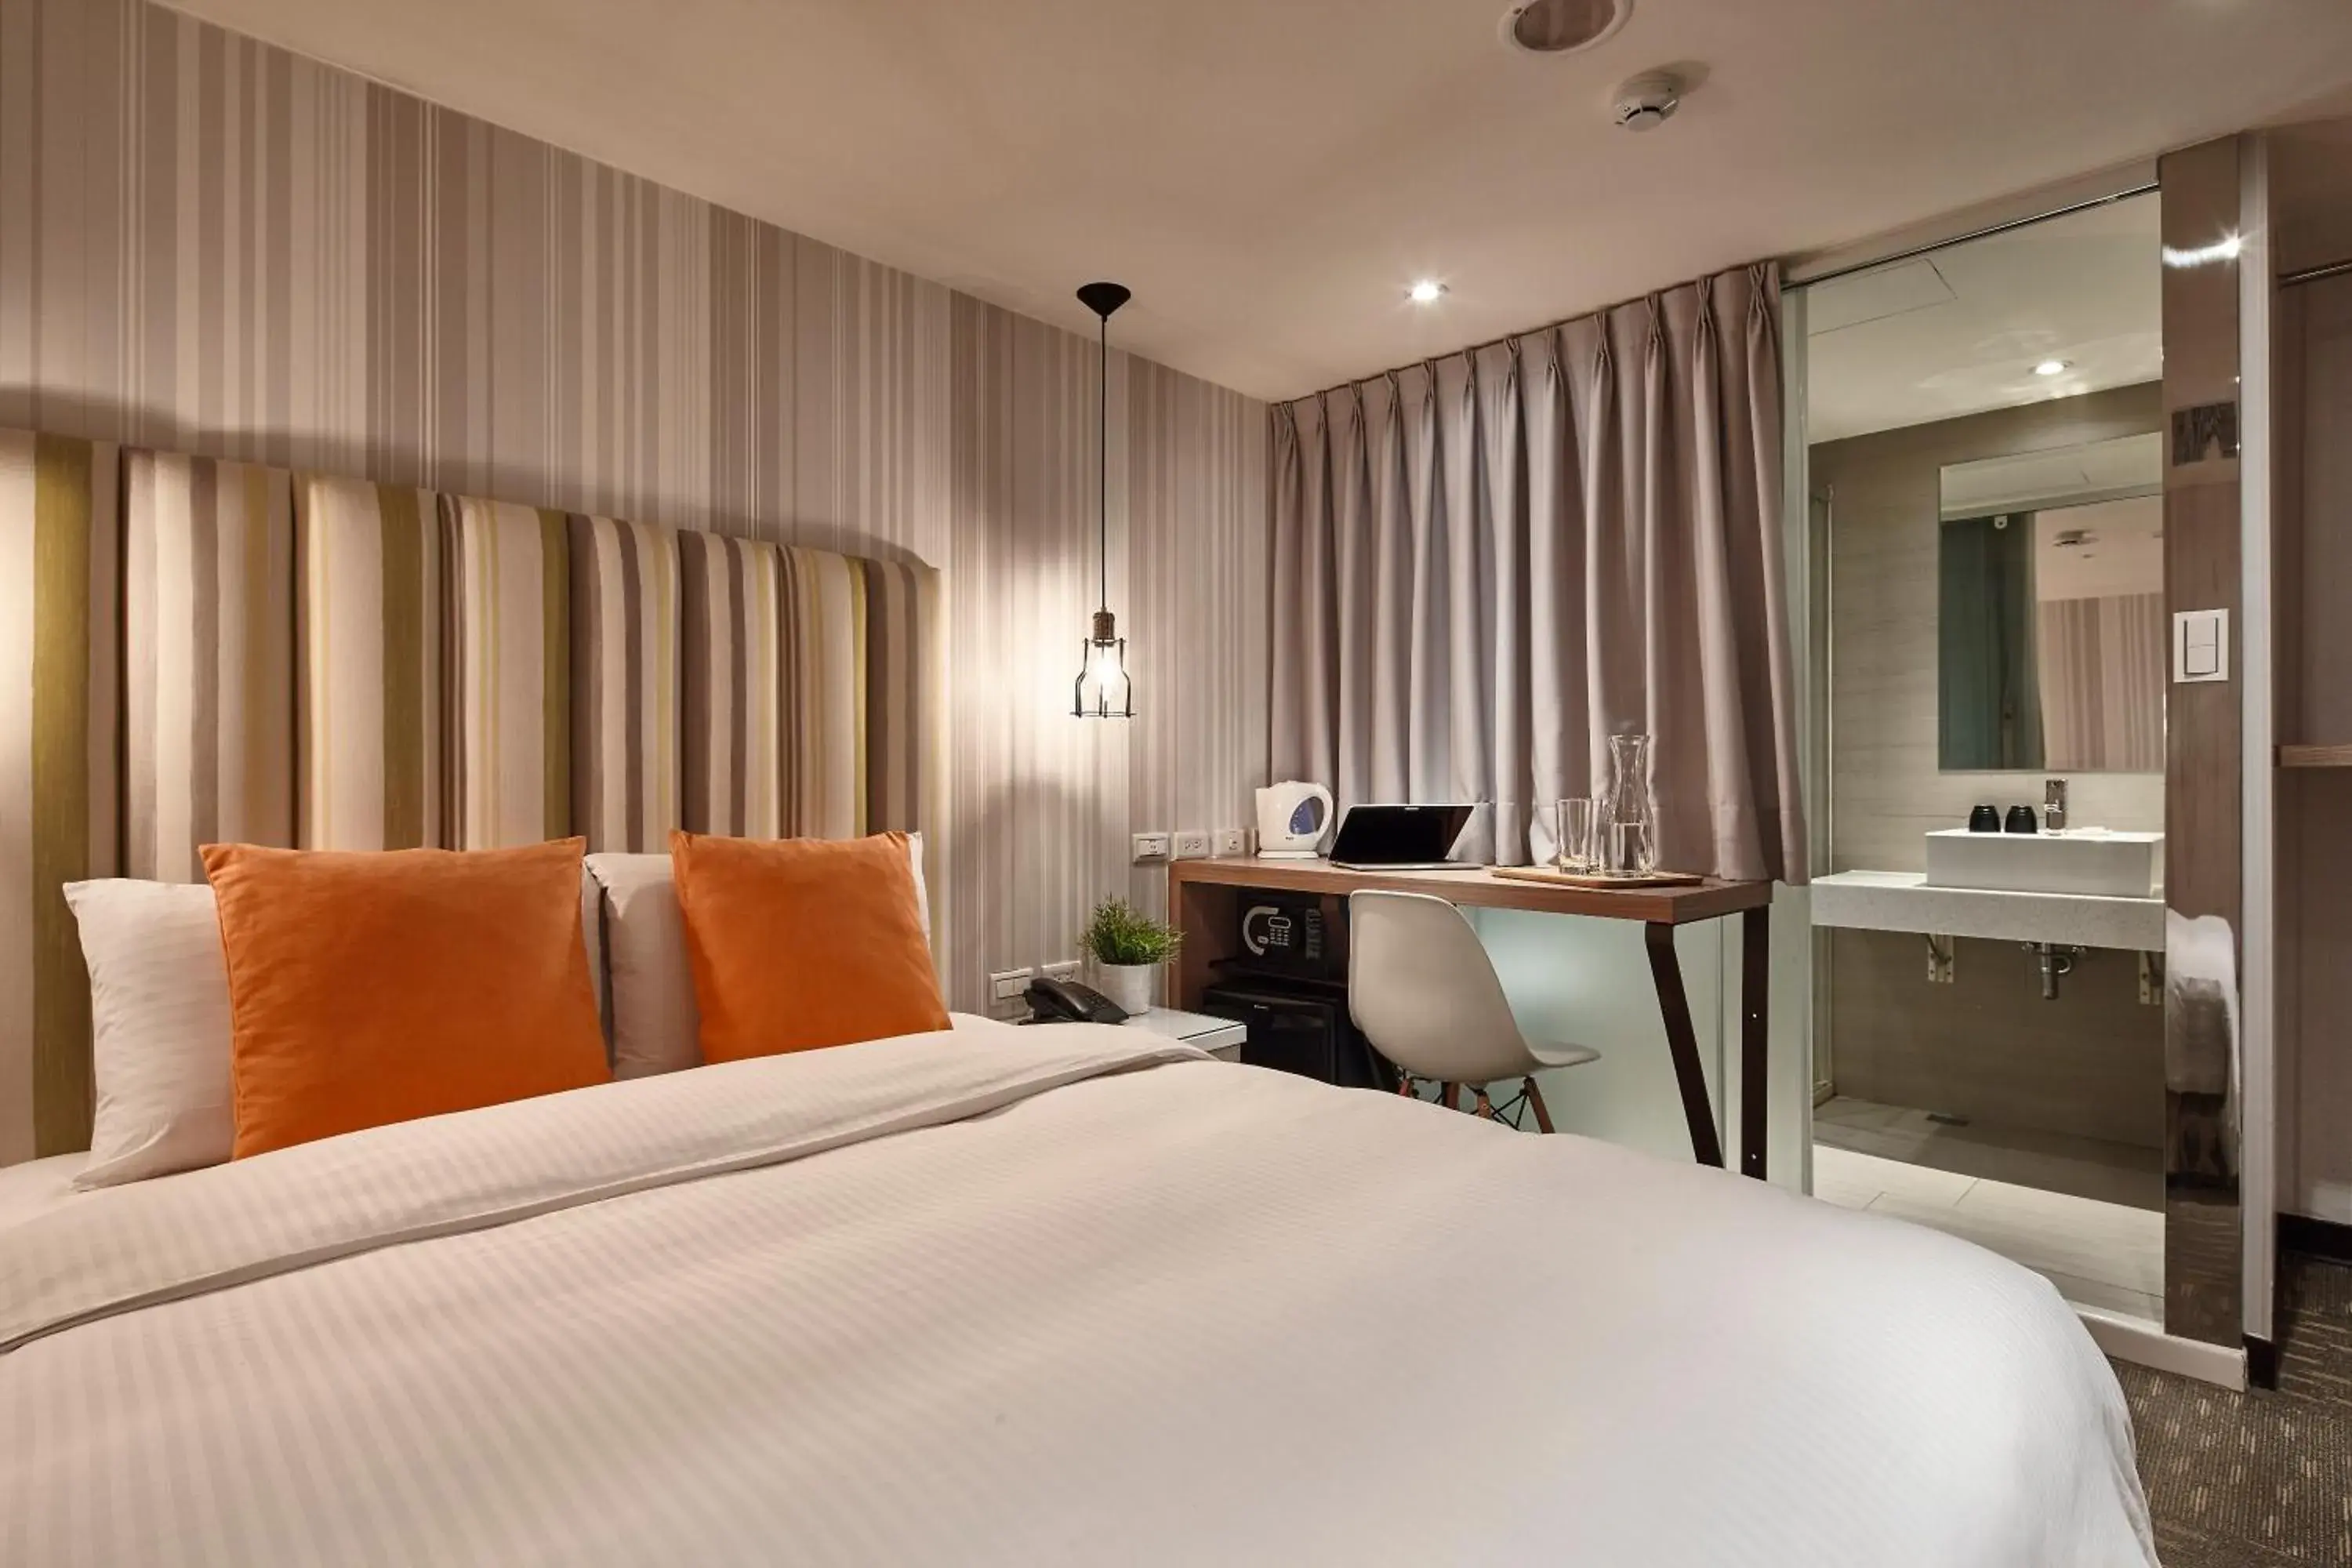 Bed in Via Hotel Loft